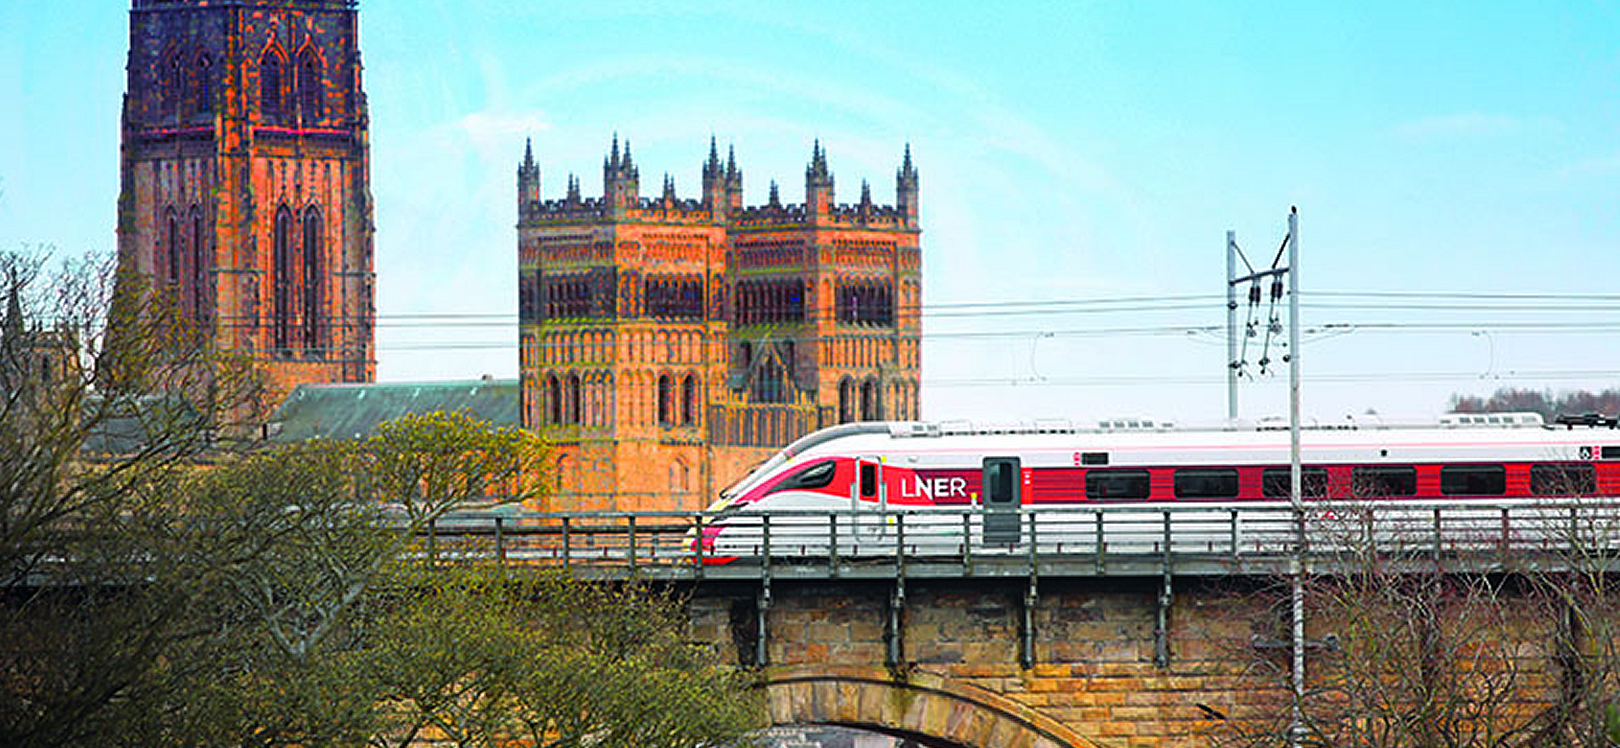 LNER train in Durham